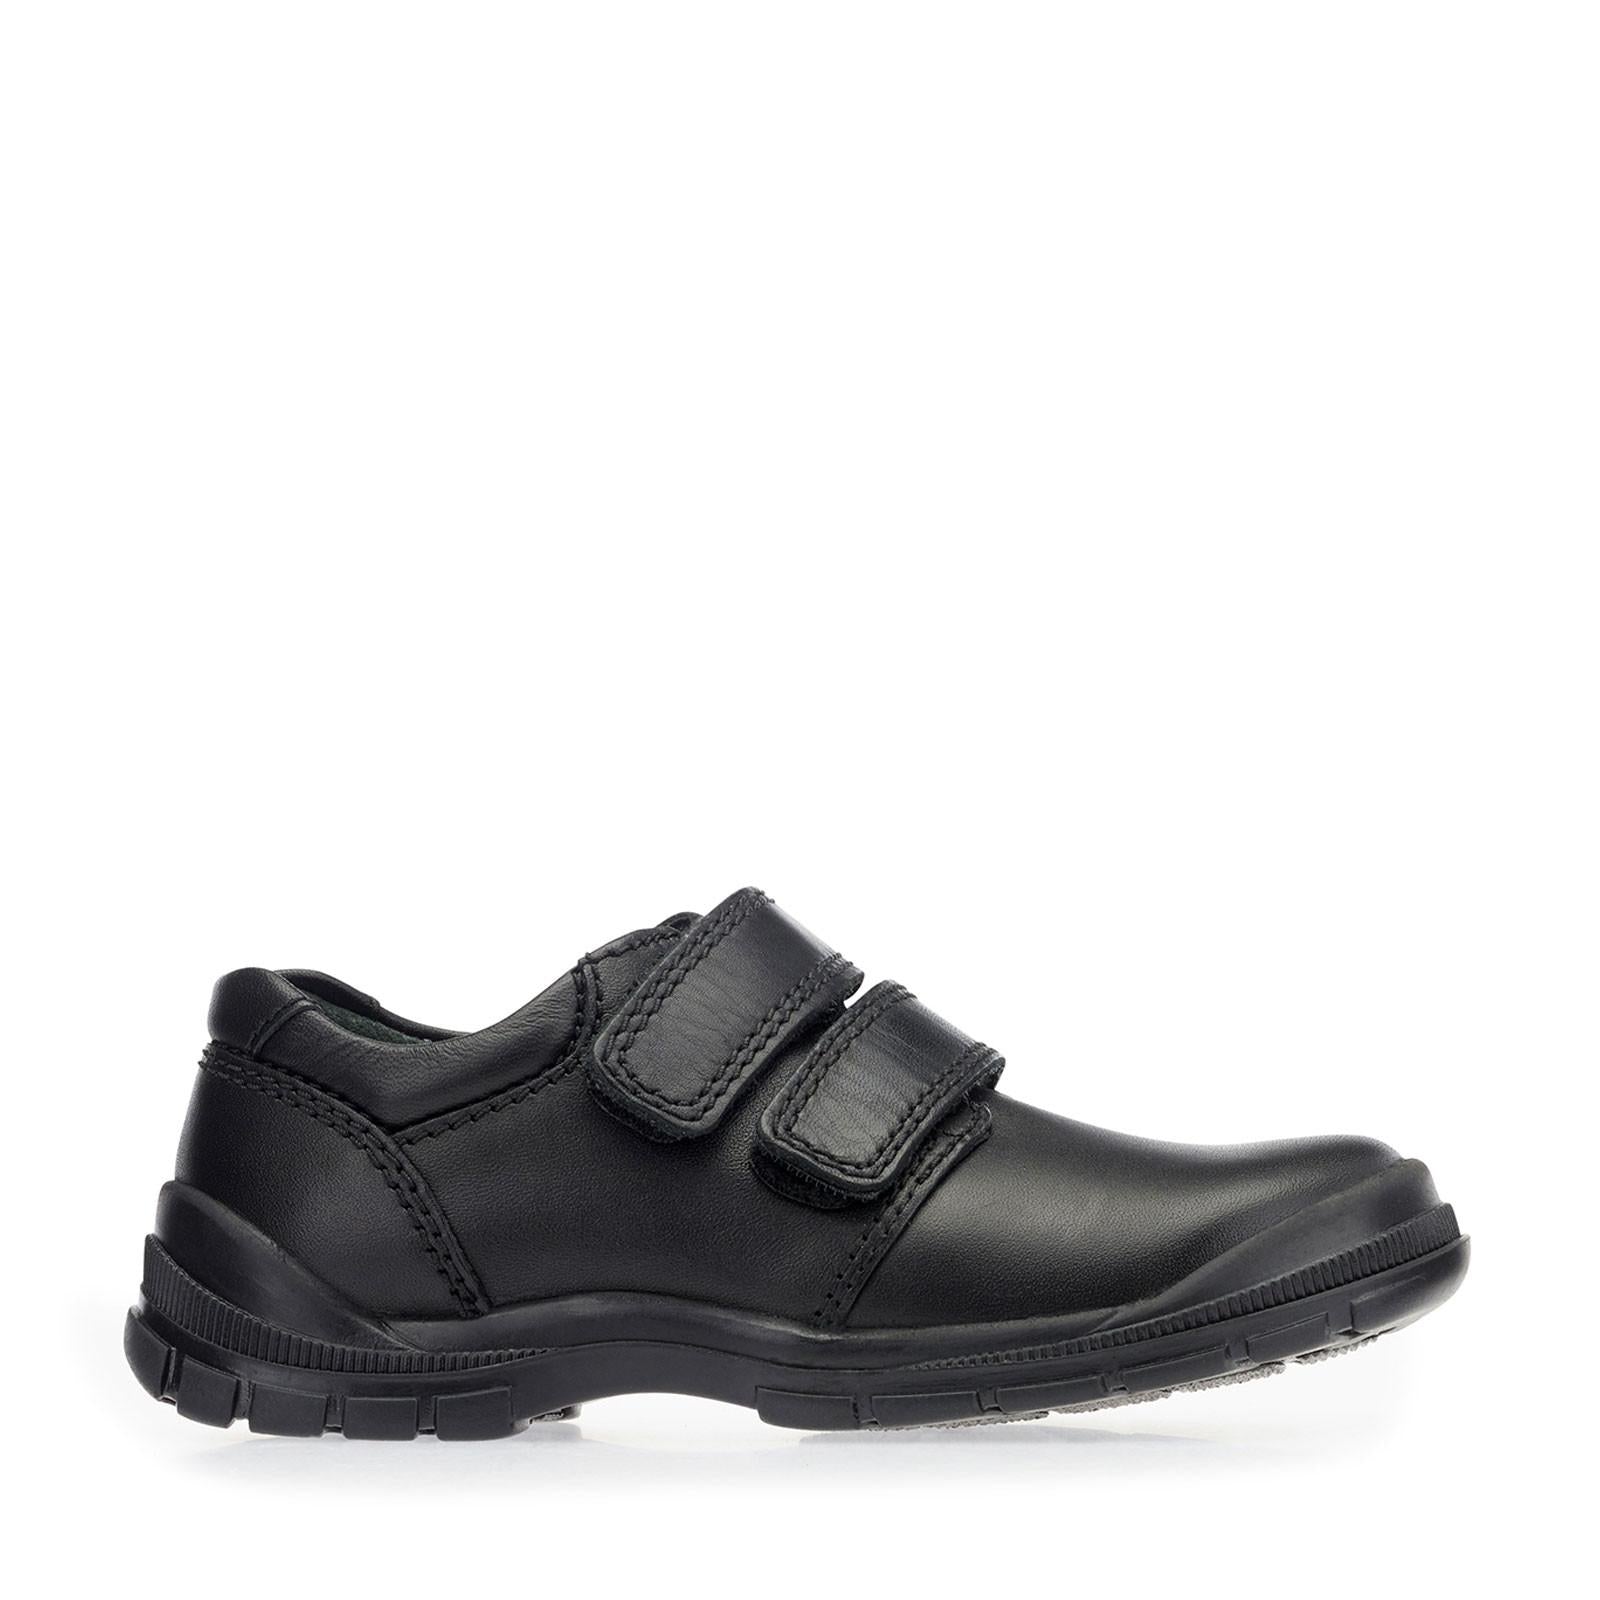 Startrite Engineer School Shoes 2270 F FIT Footwear UK9 KIDS / Black,UK10 KIDS / Black,UK11 KIDS / Black,UK12 KIDS / Black,UK13 KIDS / Black,UK13.5 KIDS / Black,UK1 KIDS / Black,UK1.5 KIDS / Black,UK2 KIDS / Black,UK2.5 KIDS / Black,UK3 KIDS / Black,UK3.5 KIDS / Black